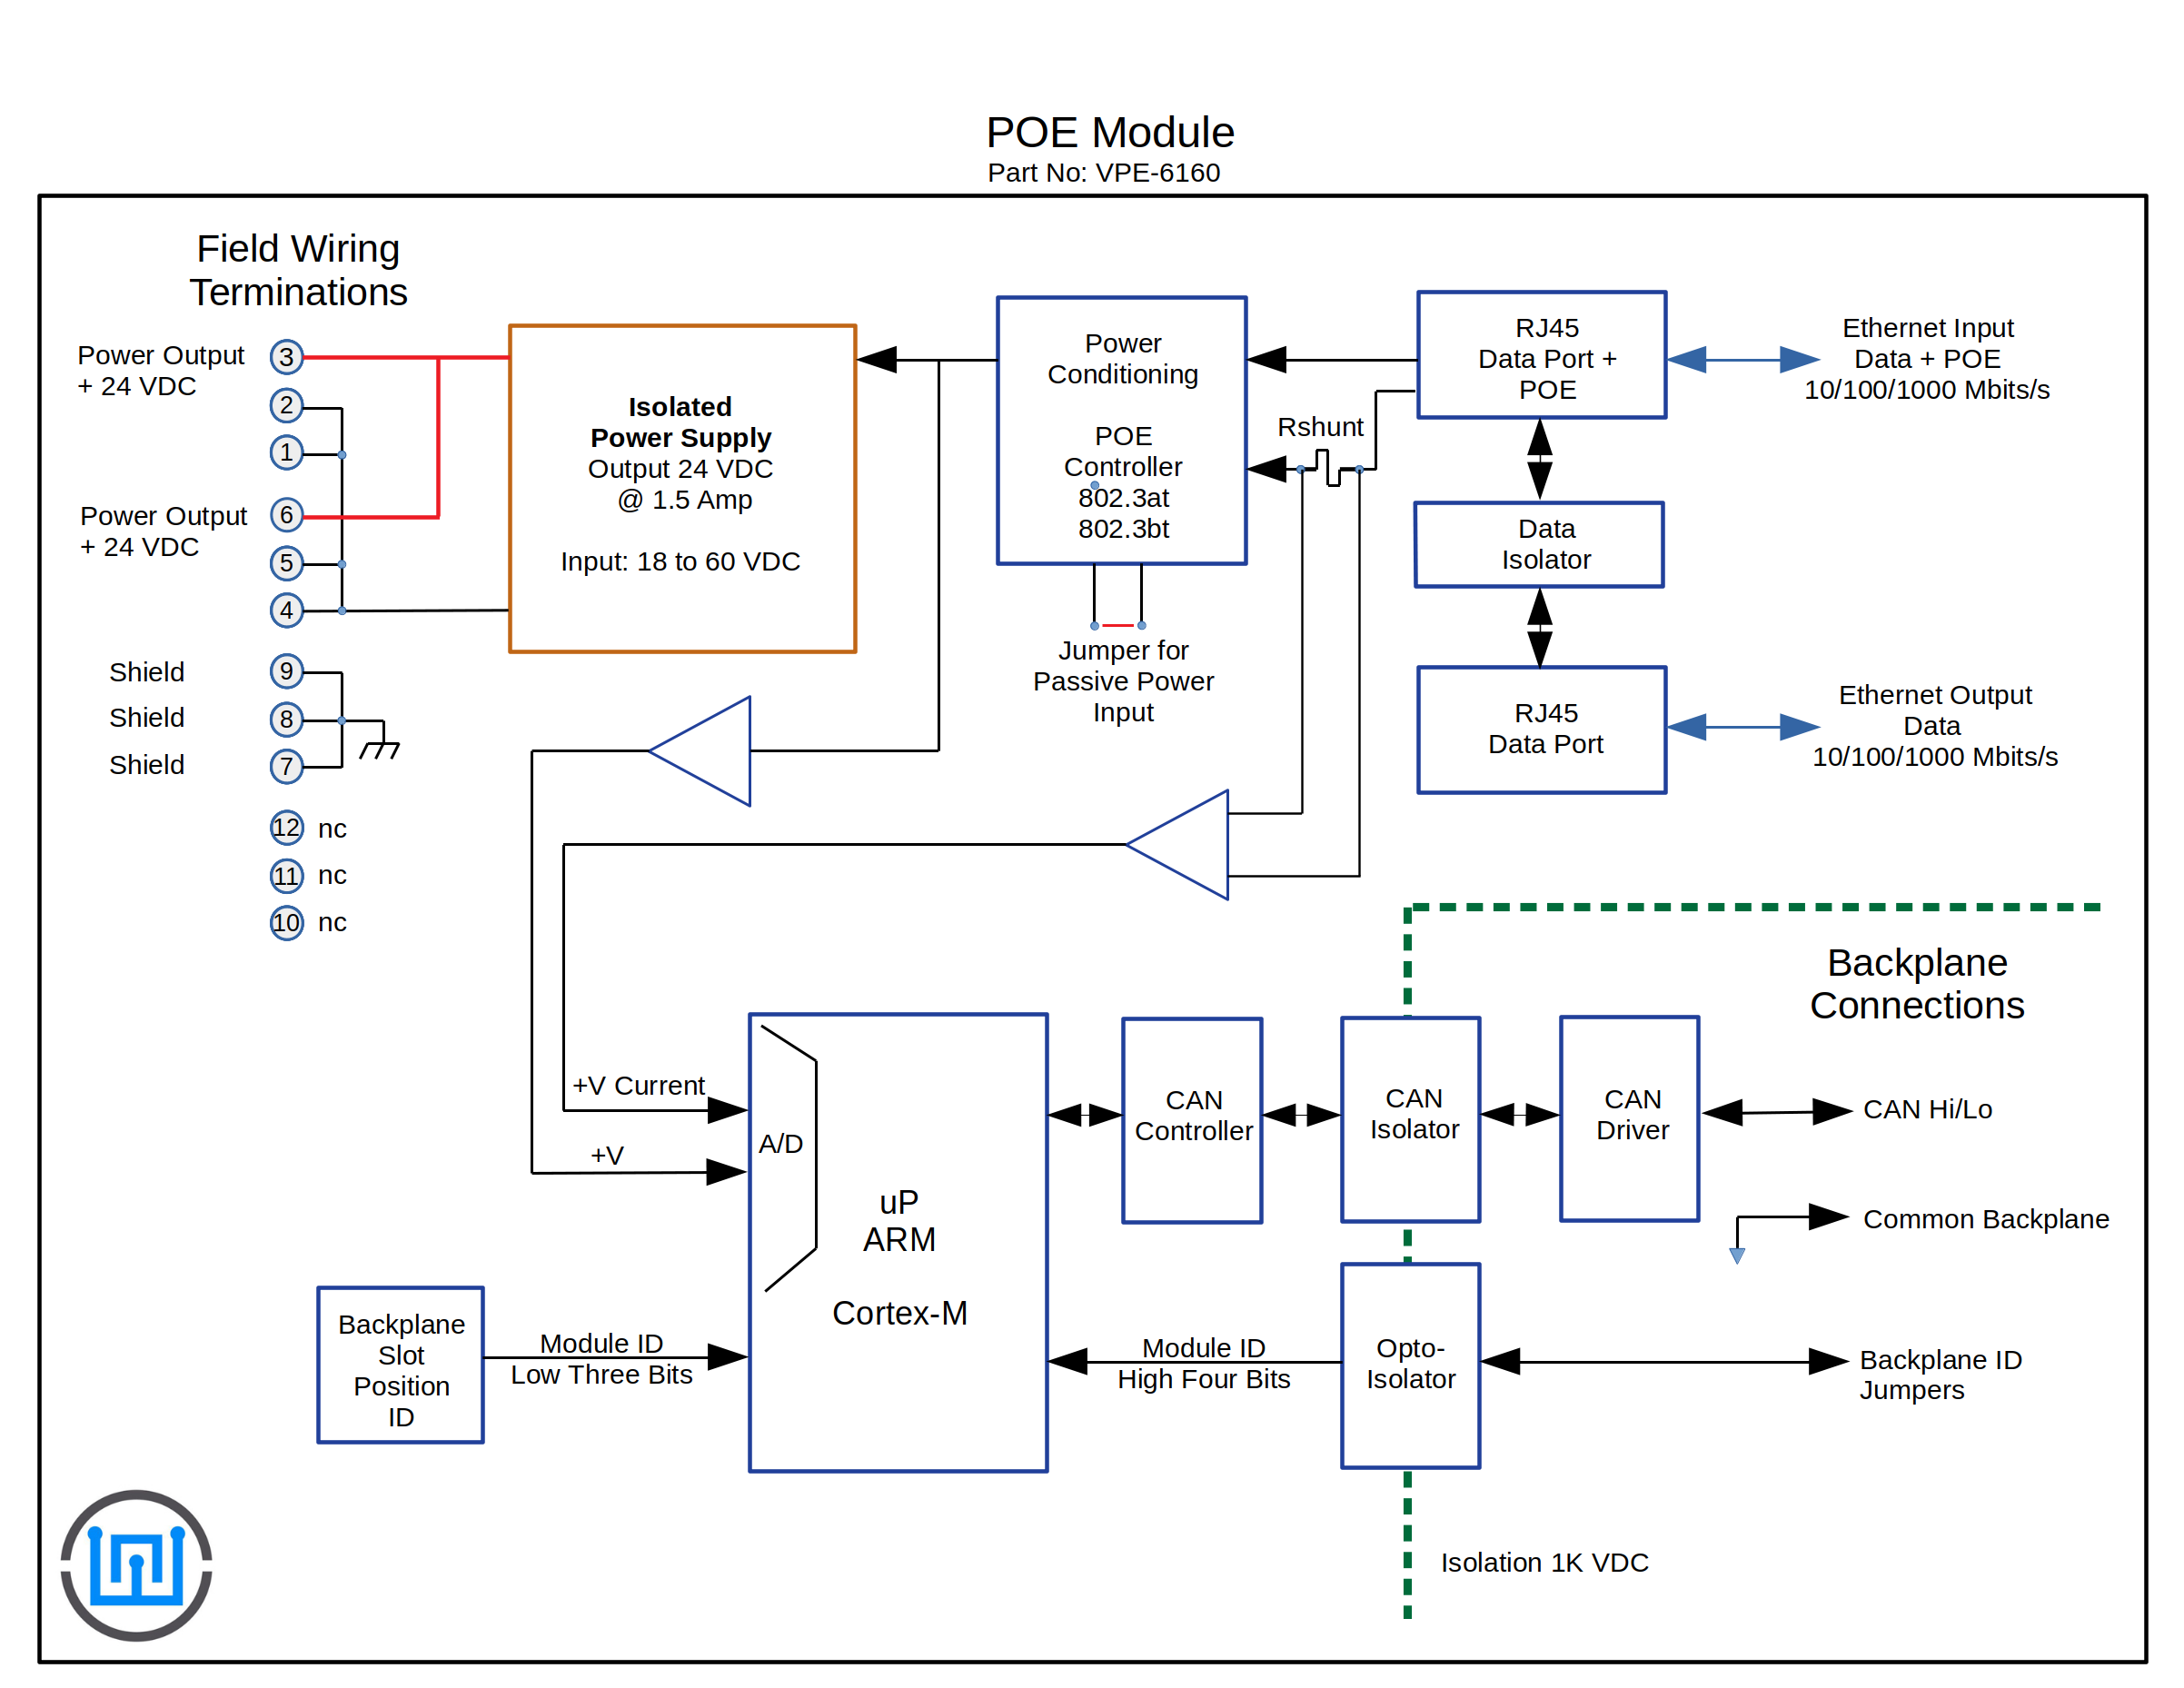 VPE-6160 PoE Power Over Ethernet Module Block Diagram